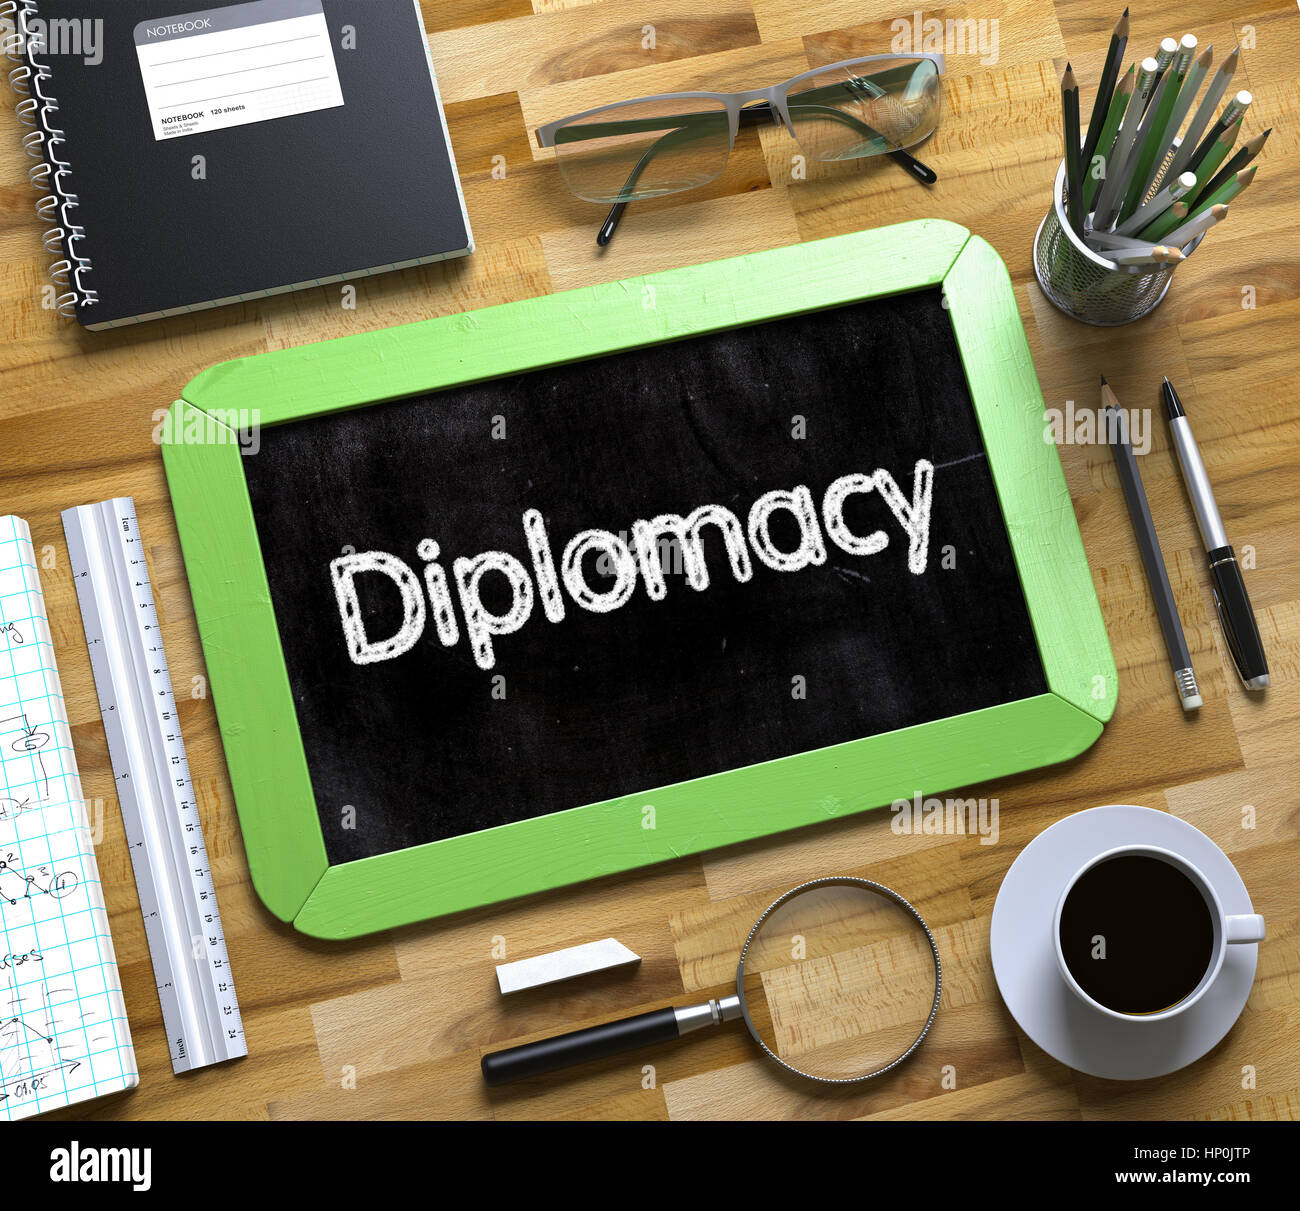 Diplomacy Handwritten on Small Chalkboard. 3D. Stock Photo